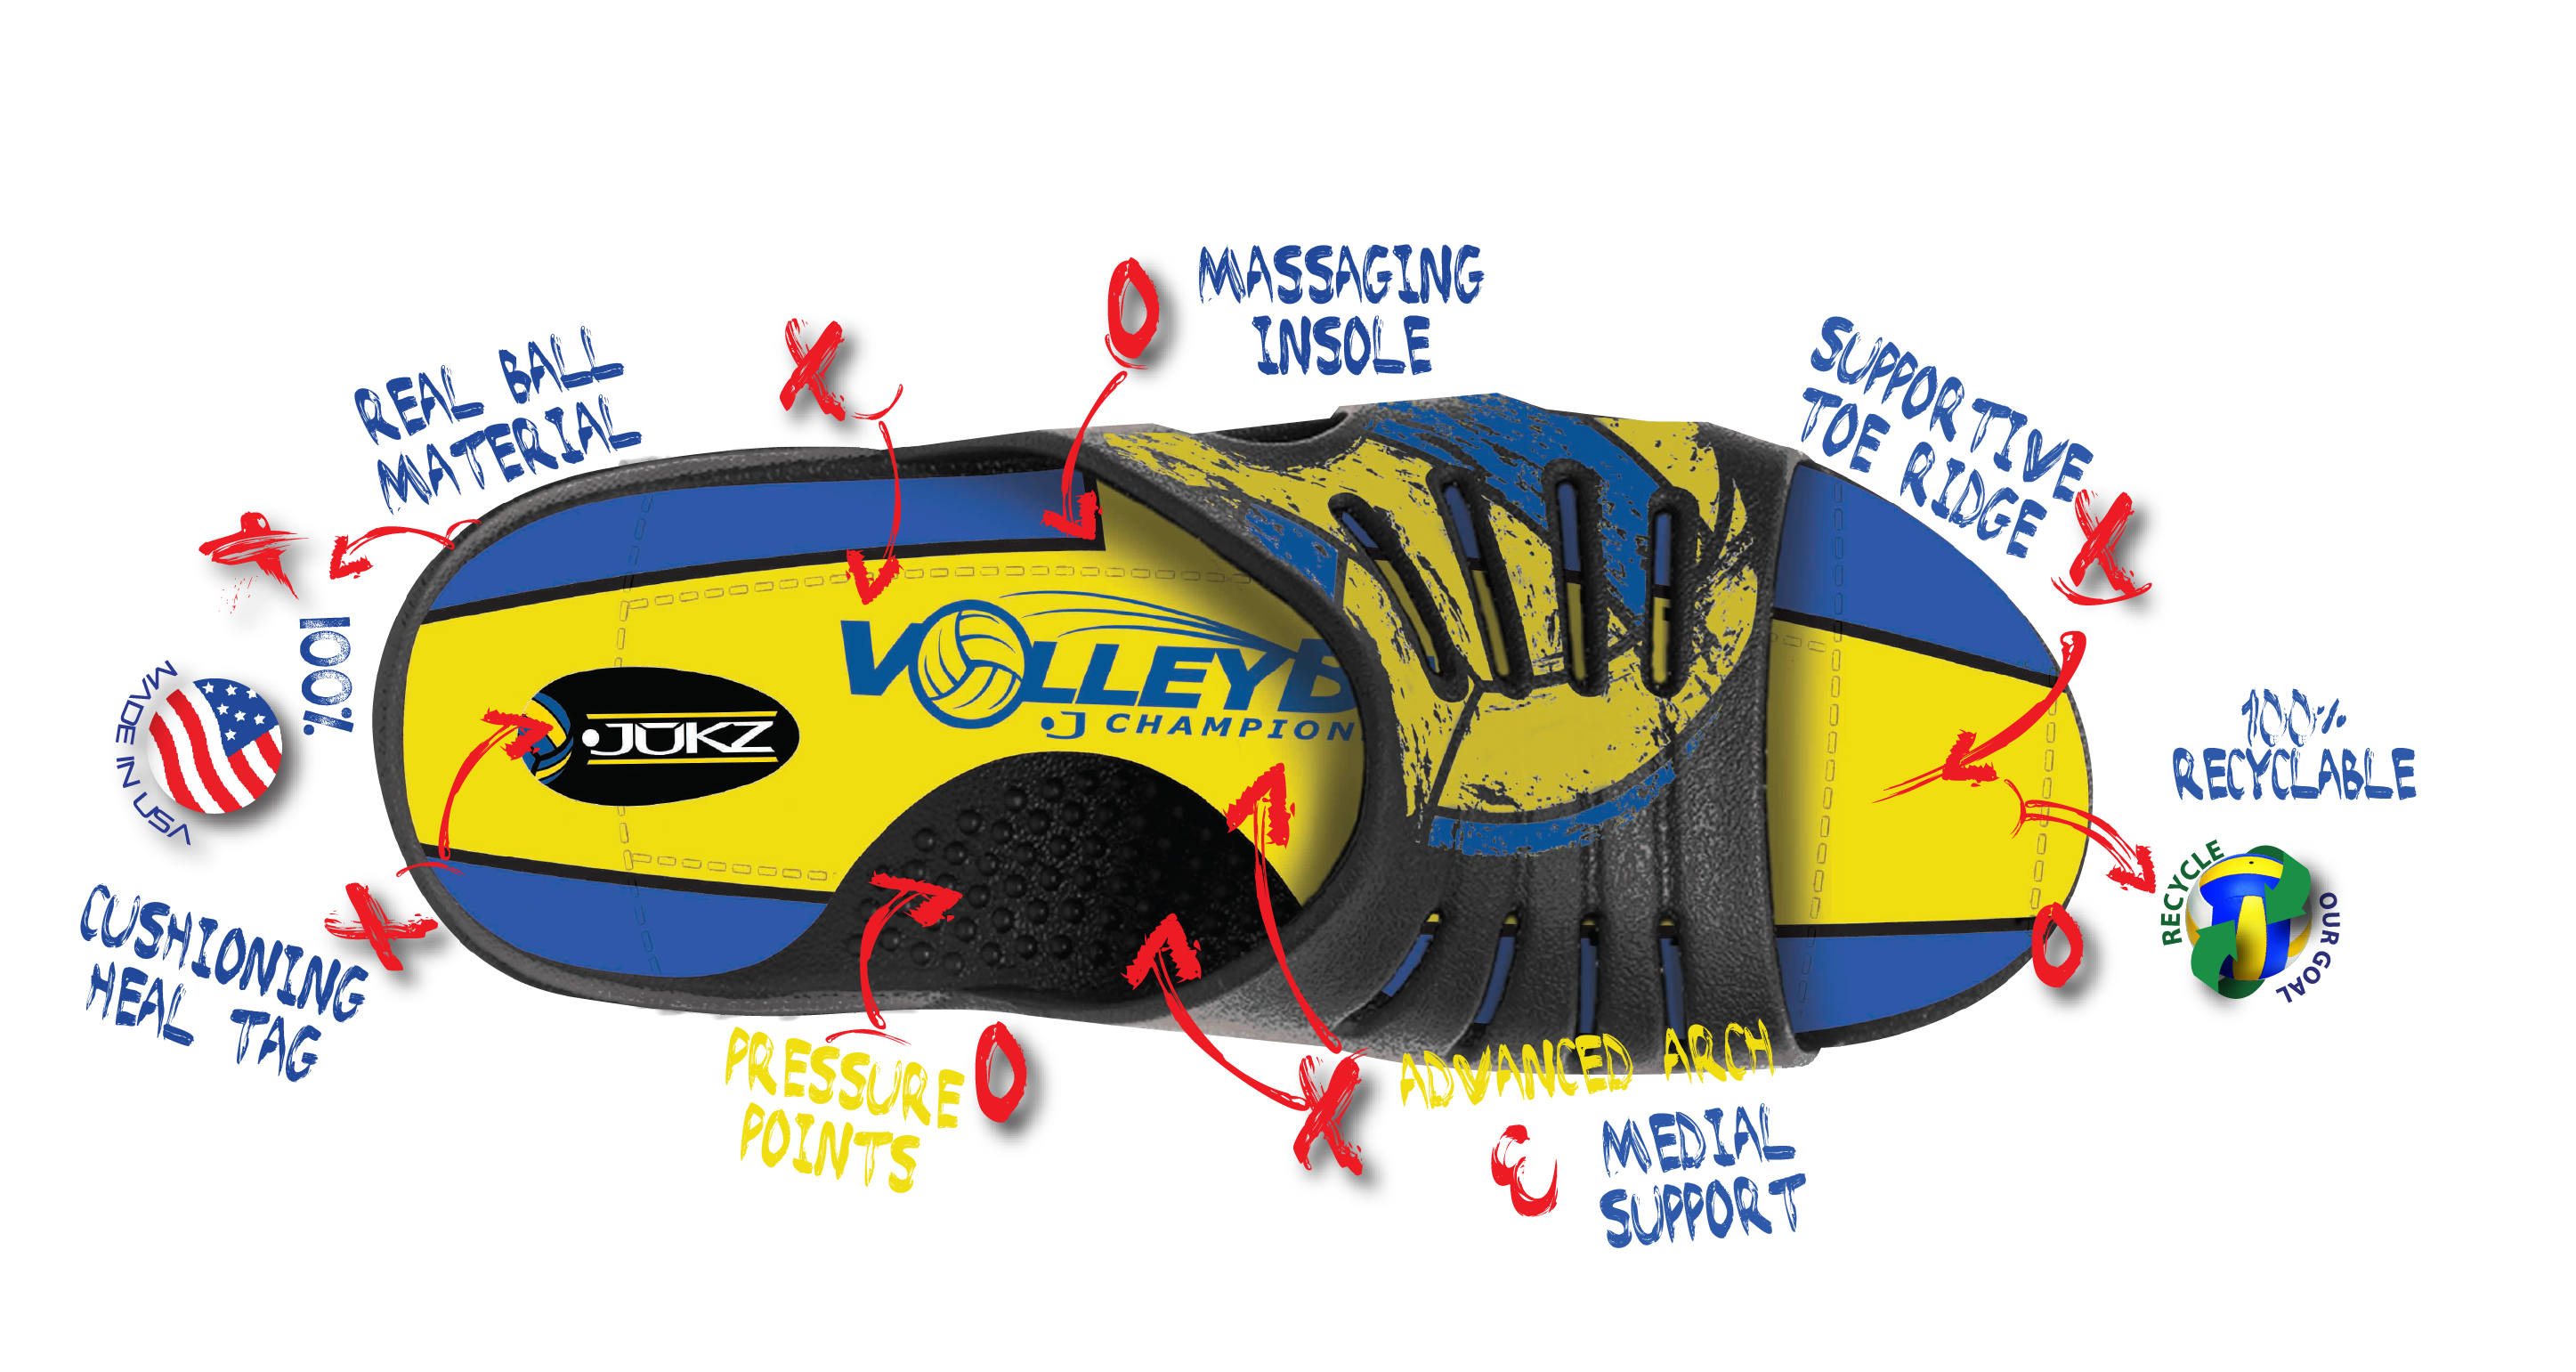 Cac Mustangs Volleyball Slide - Jukz Sports Kst-vb01-ml Kansas (2894x1541)